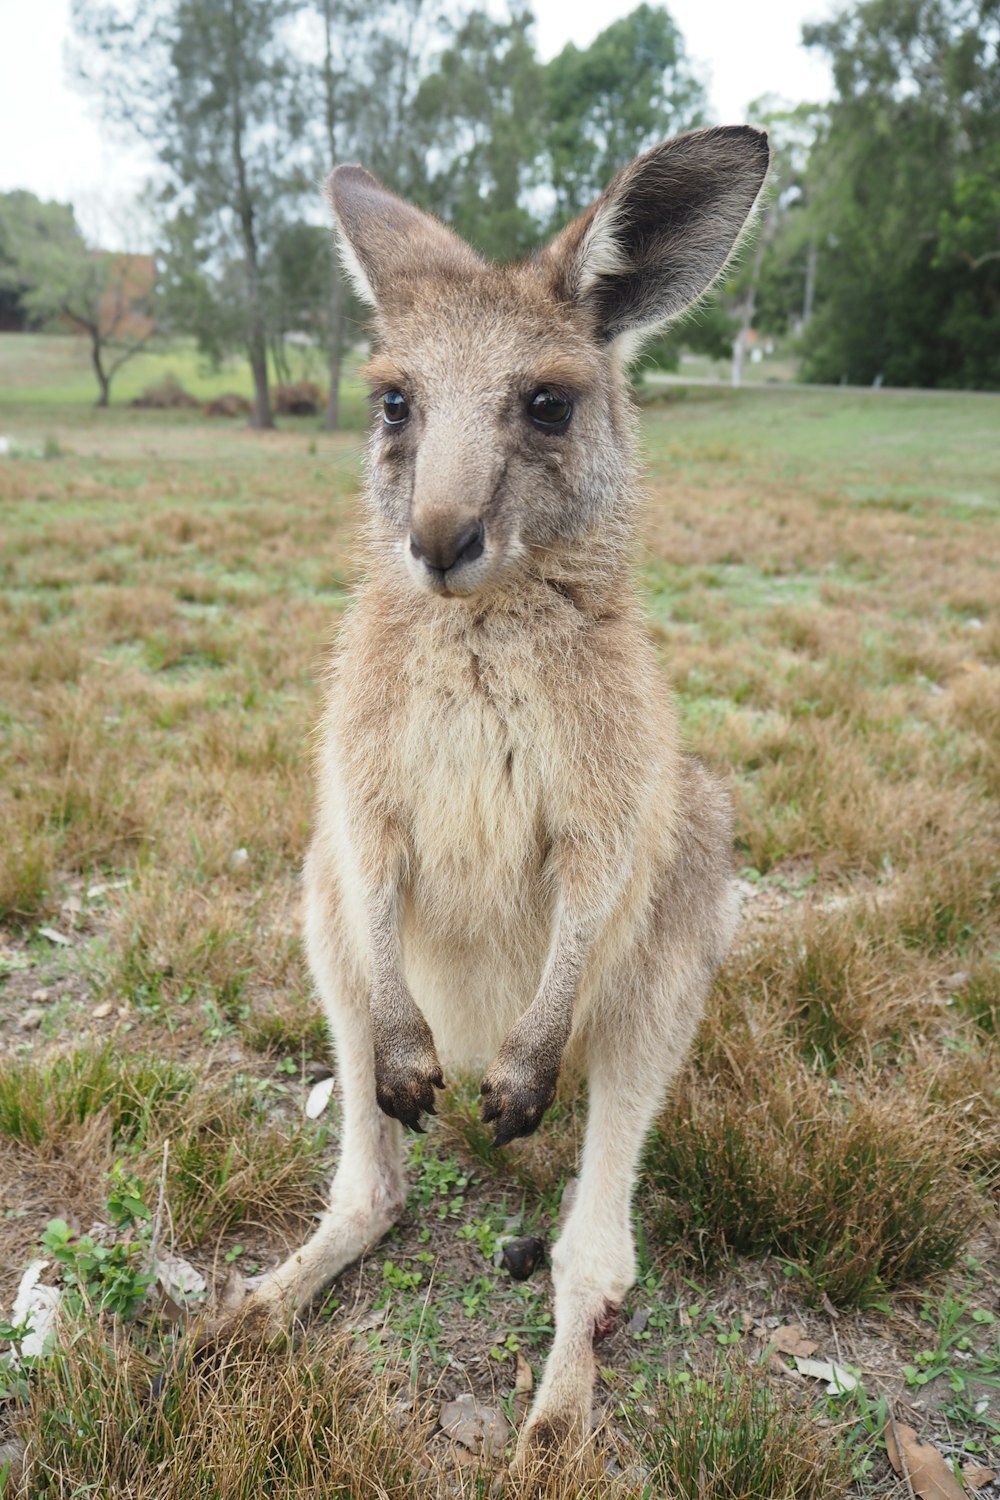 kangaroo joey at field